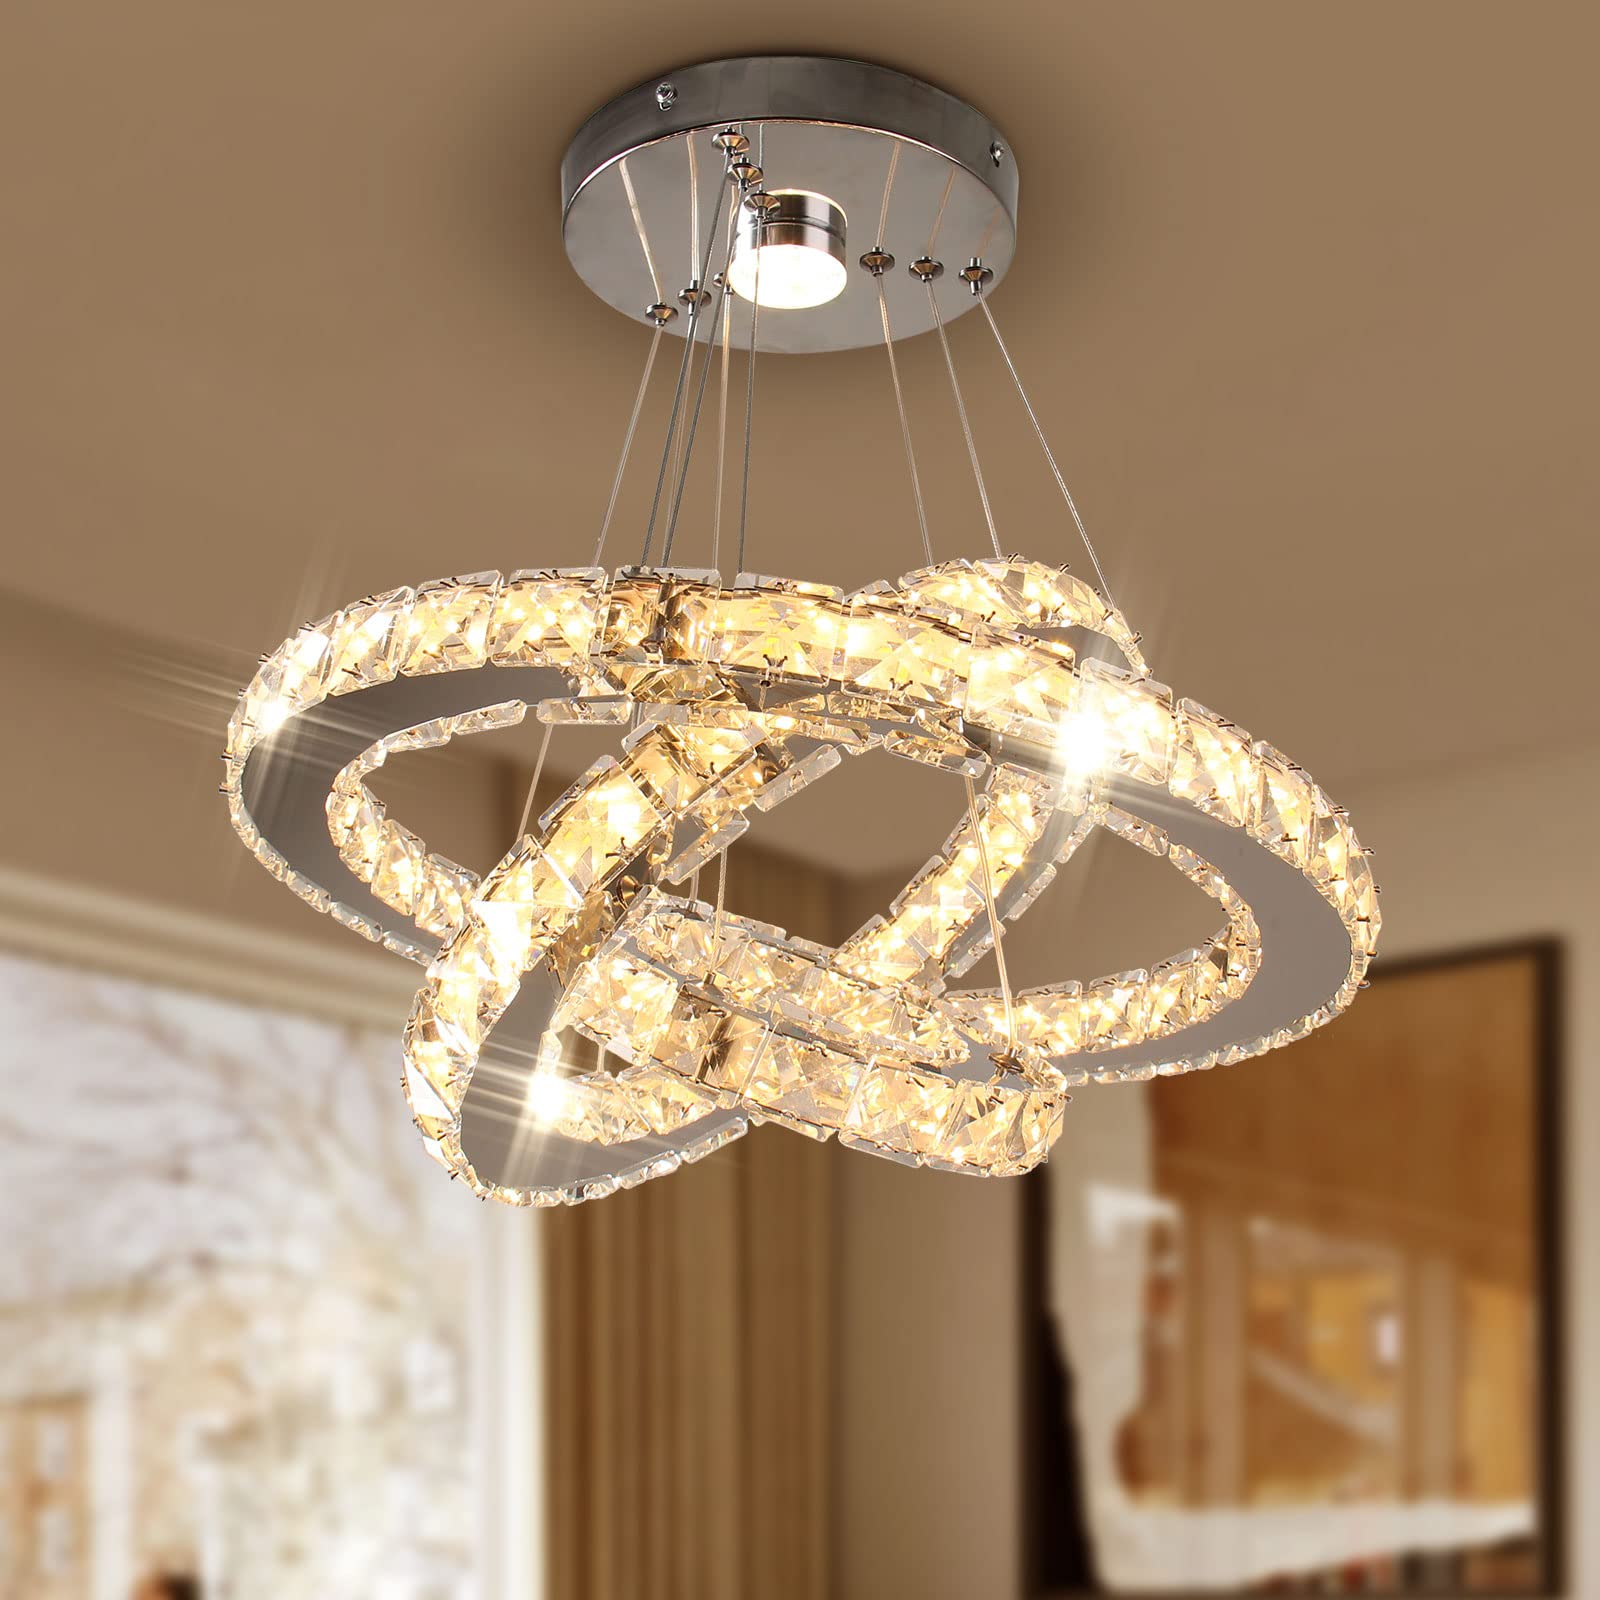 LED Chandeliers Modern Crystal 3 Rings Ceiling Lighting Fixture Adjustable Stainless Steel Pendant Light for Bedroom Living Room Dining Room(Warm White)